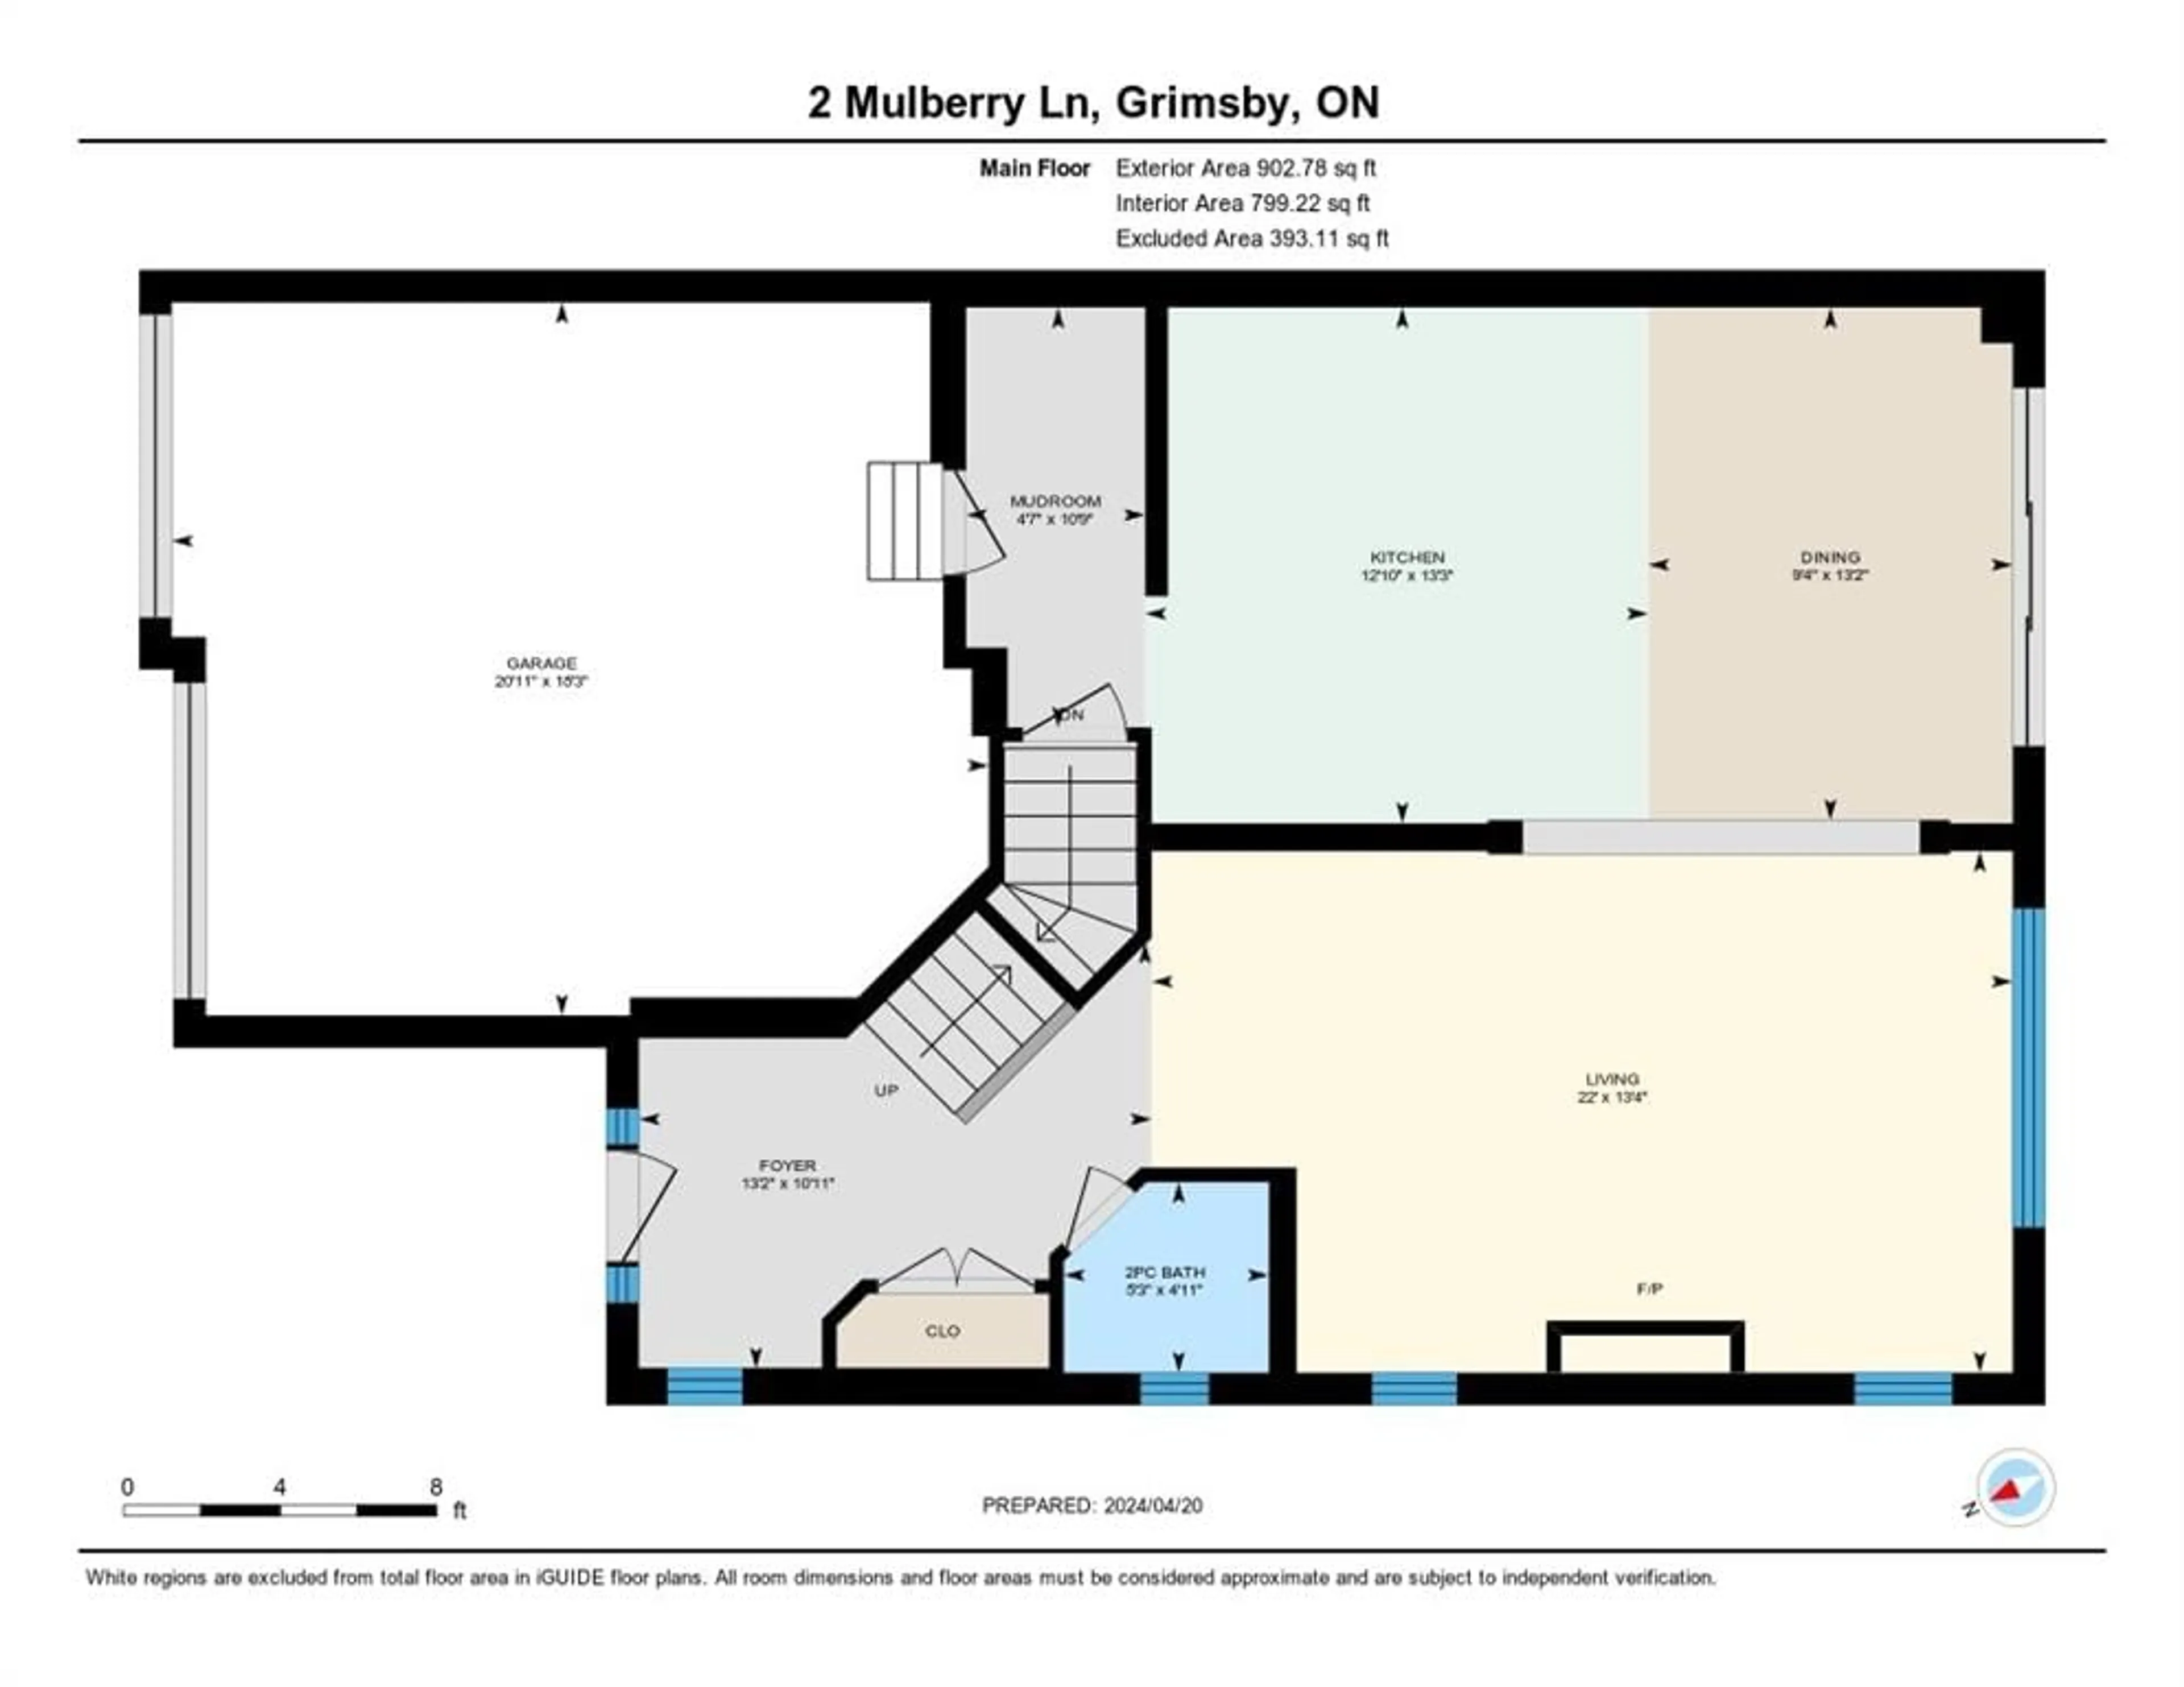 Floor plan for 2 Mulberry Lane, Grimsby Ontario L3M 0B8